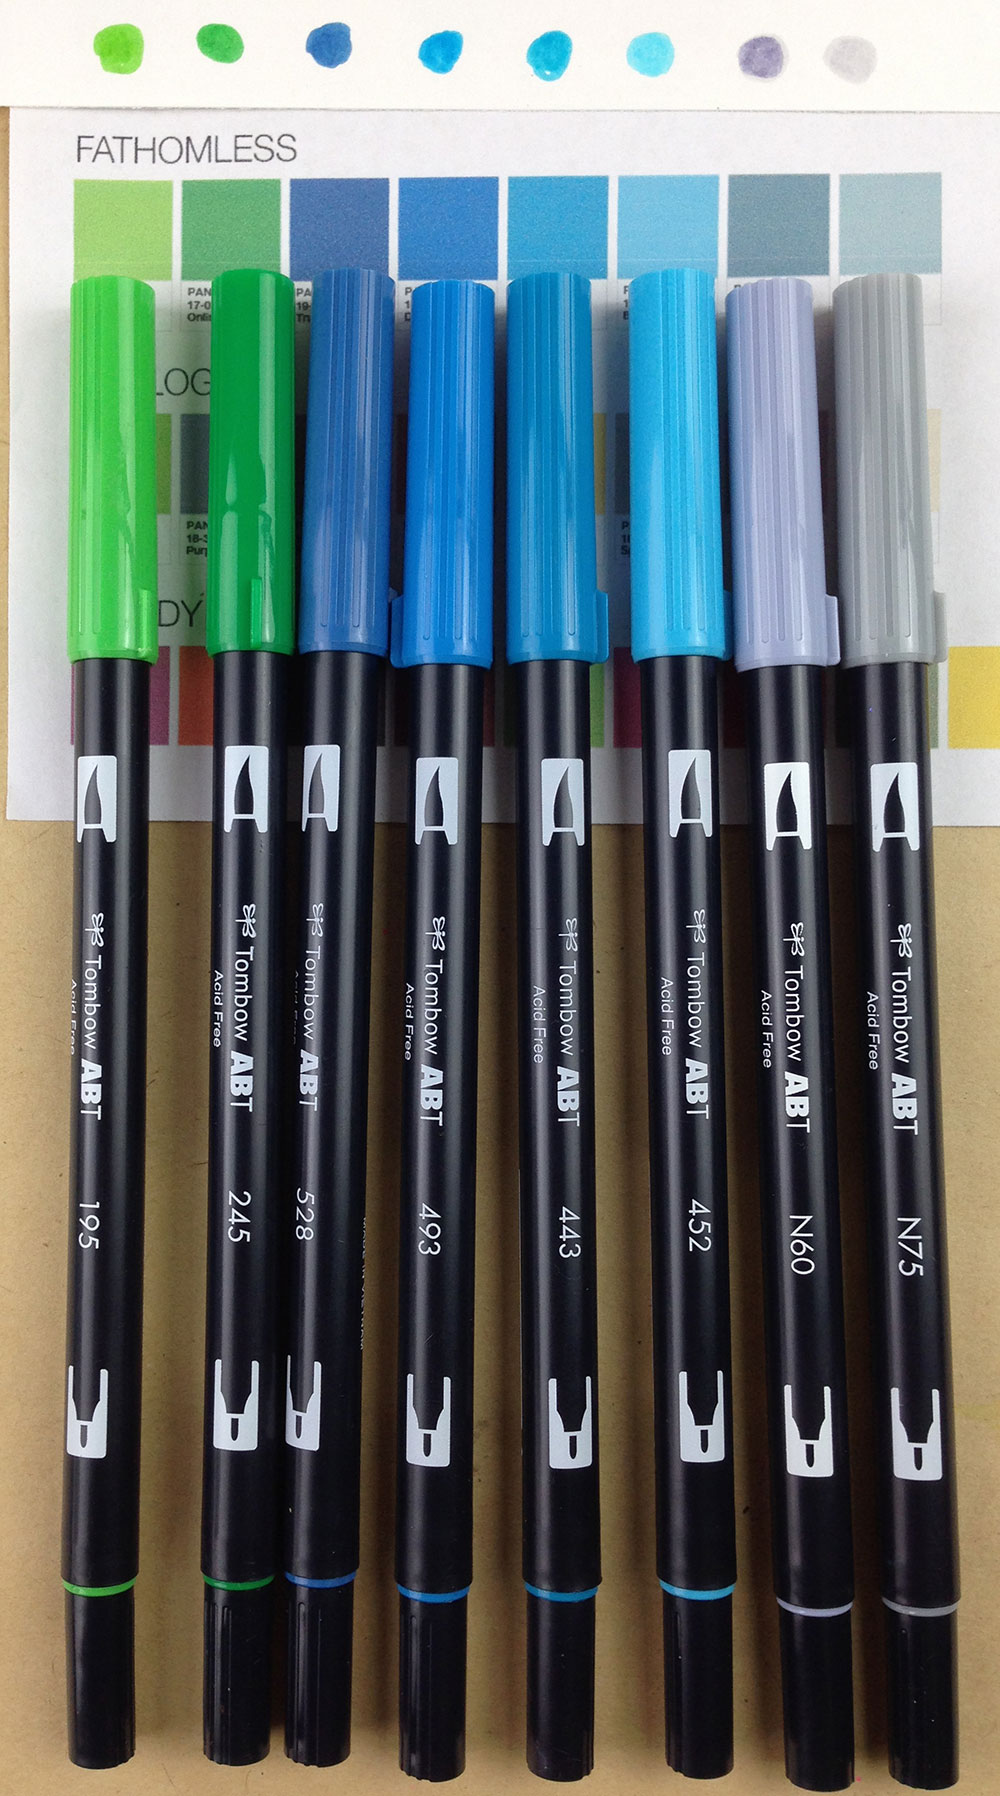 Color Harmonies with Dual Brush Pens - Tombow USA Blog